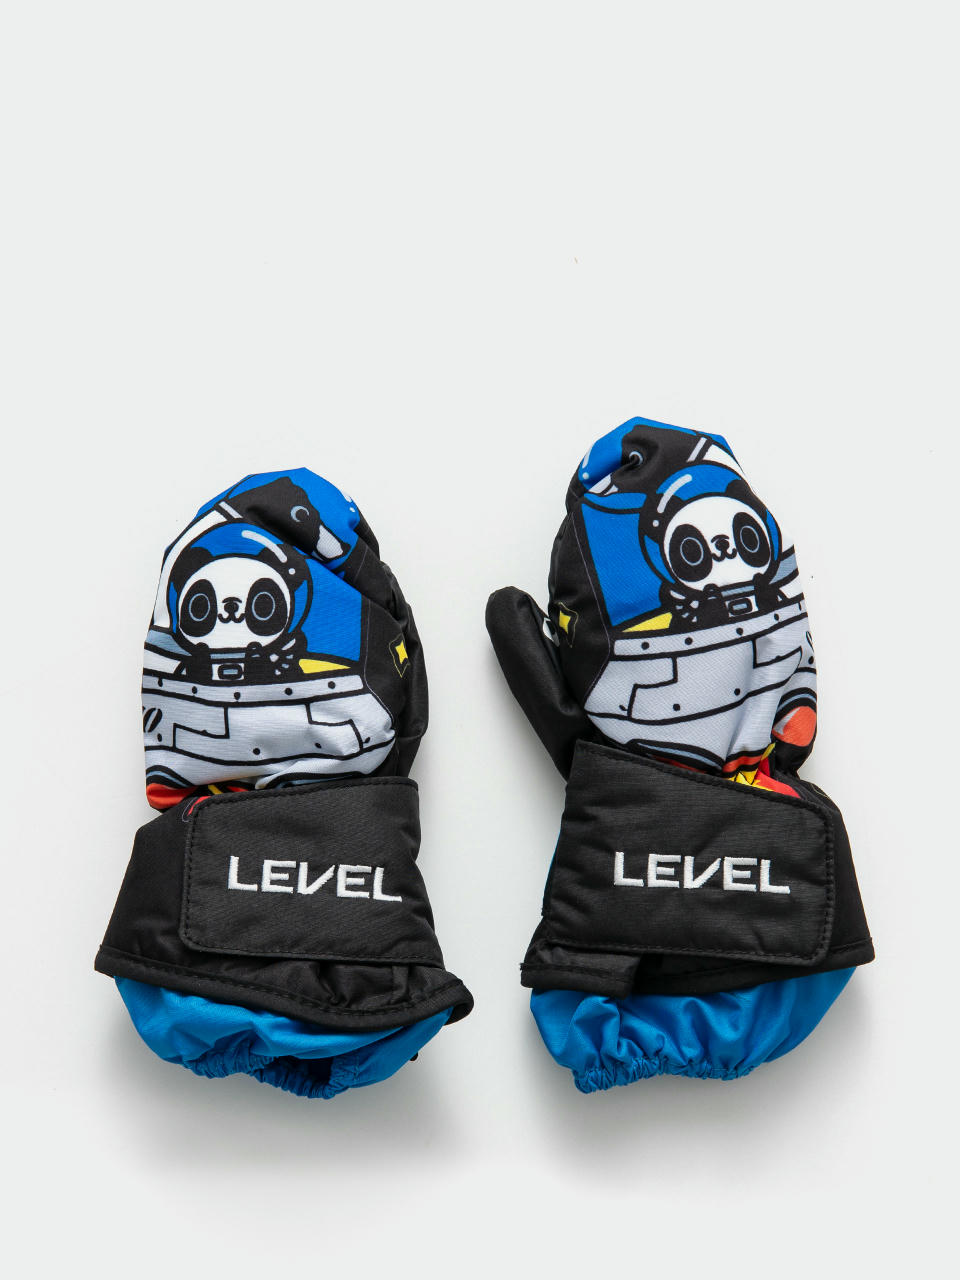 Level Animal Delfino Federica Brignone JR Gloves (pattern)